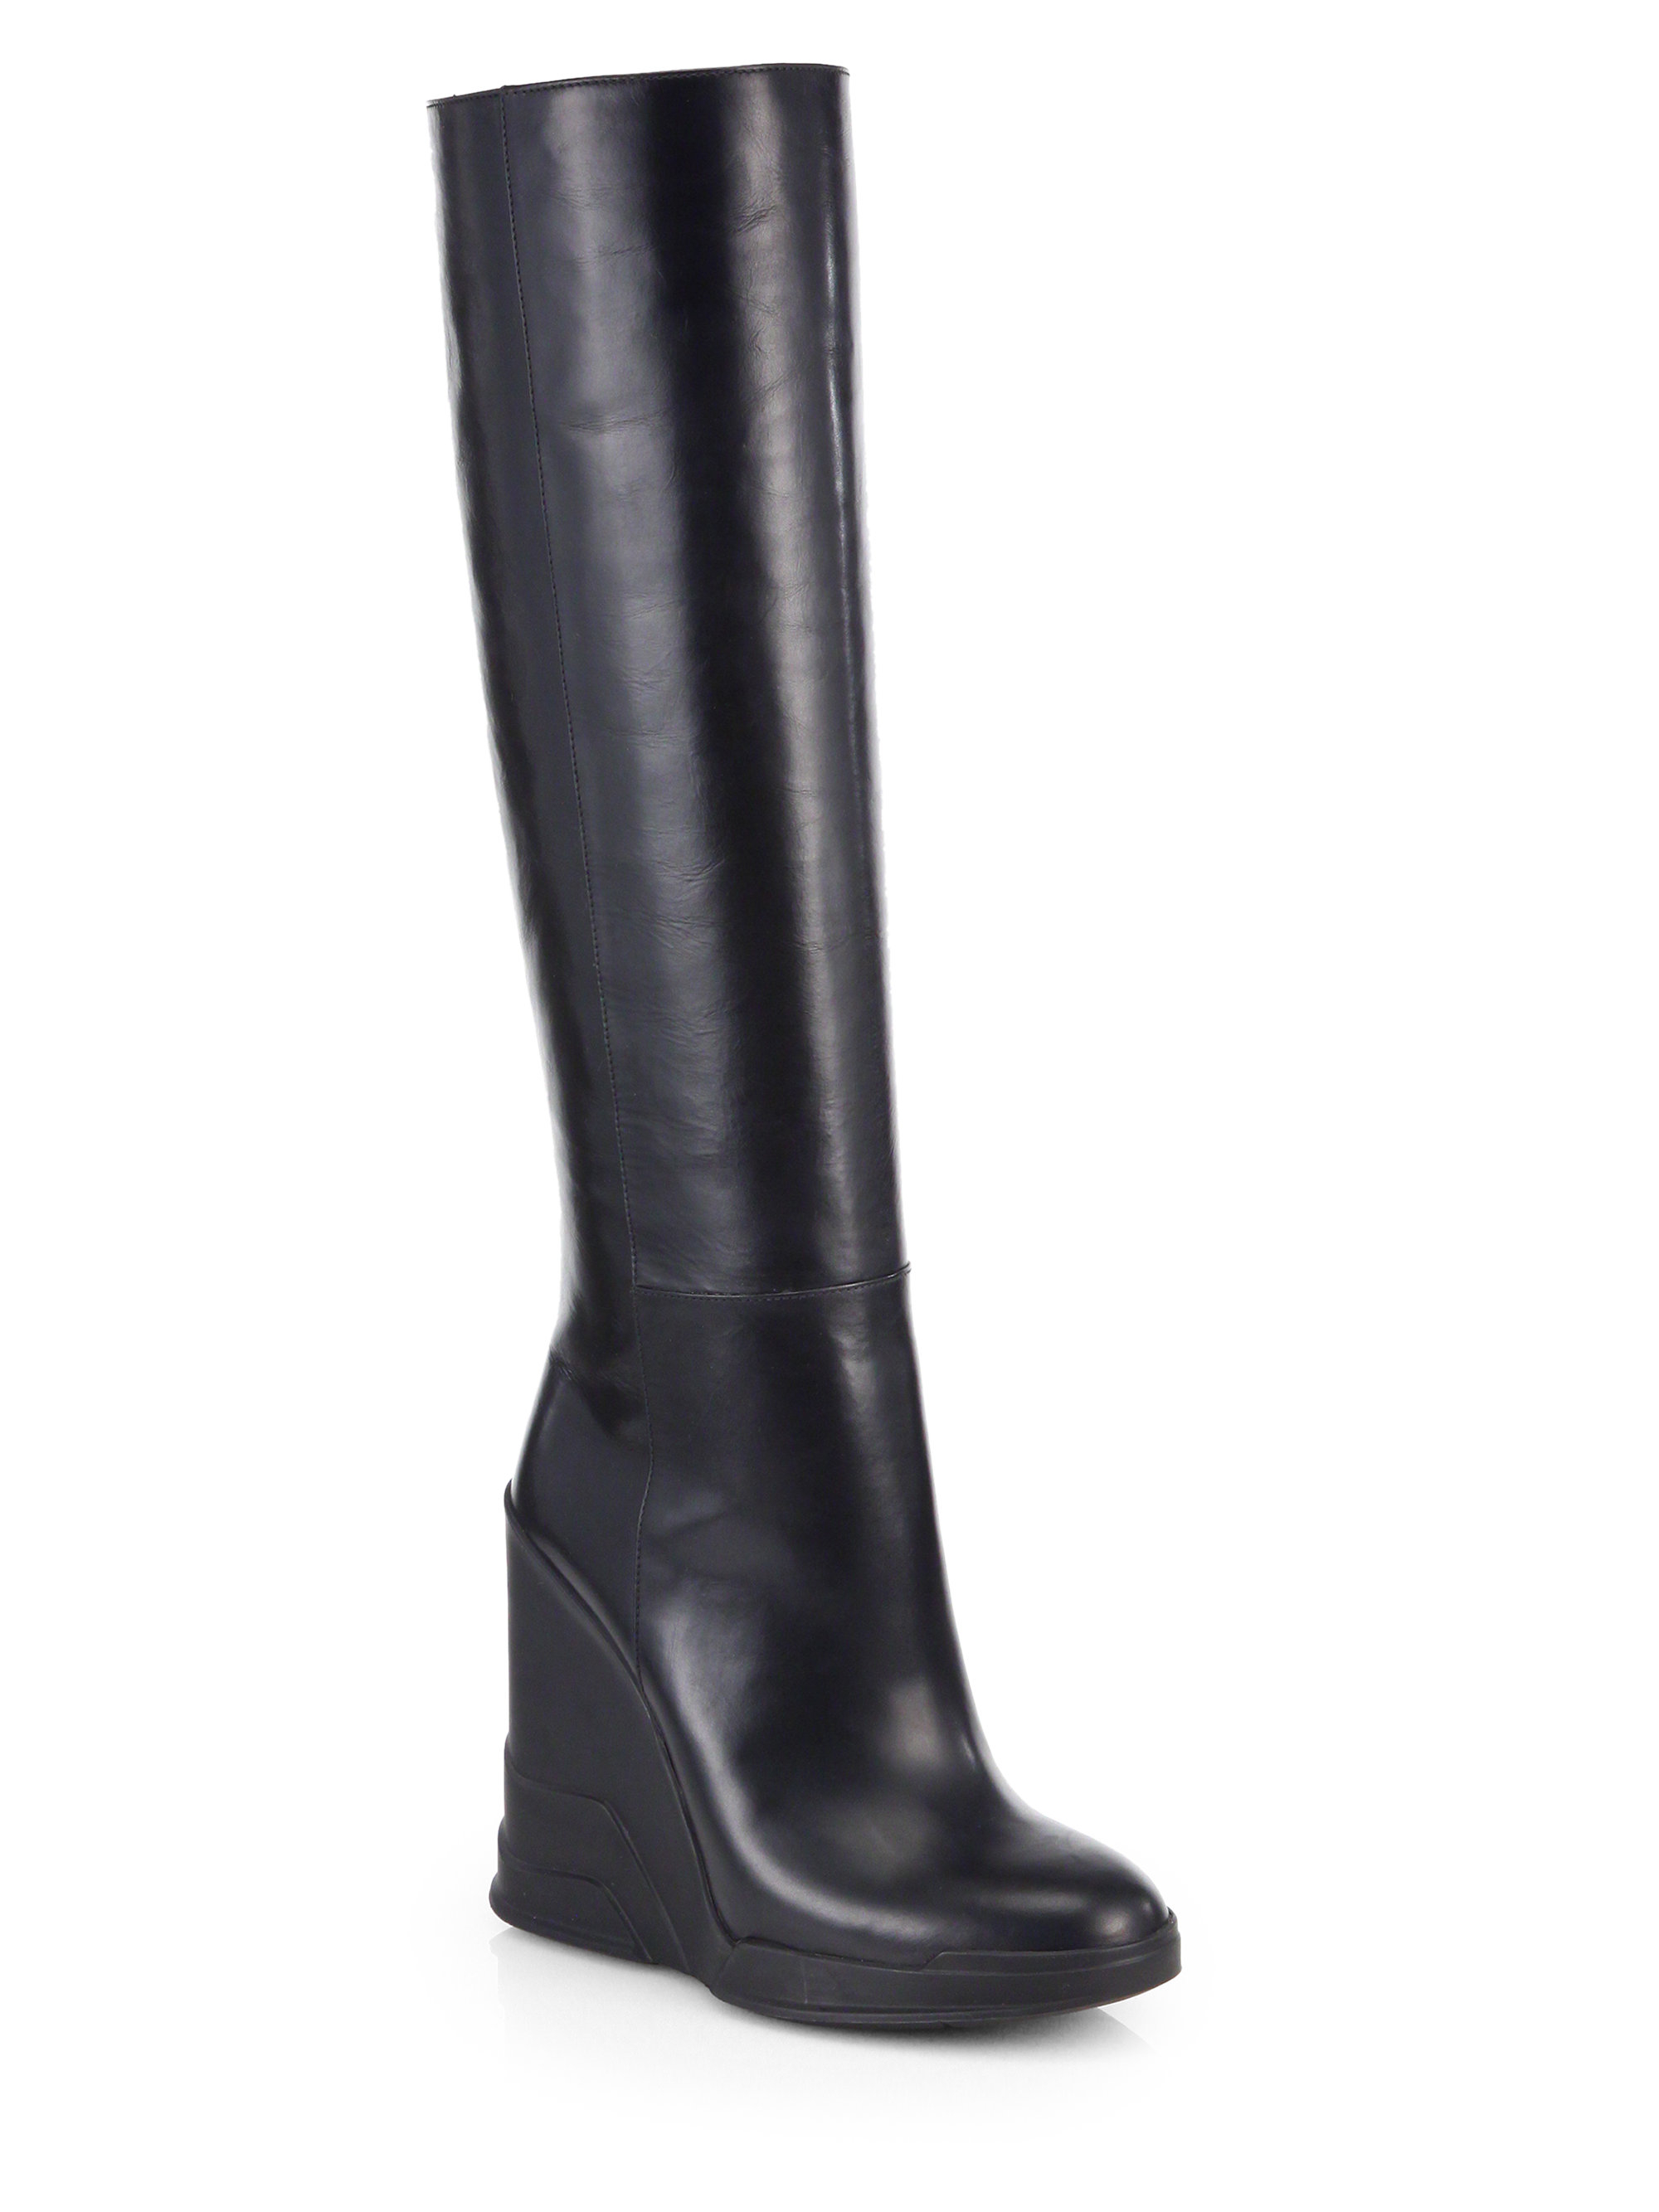 Prada Leather Knee-High Wedge Boots in Black | Lyst